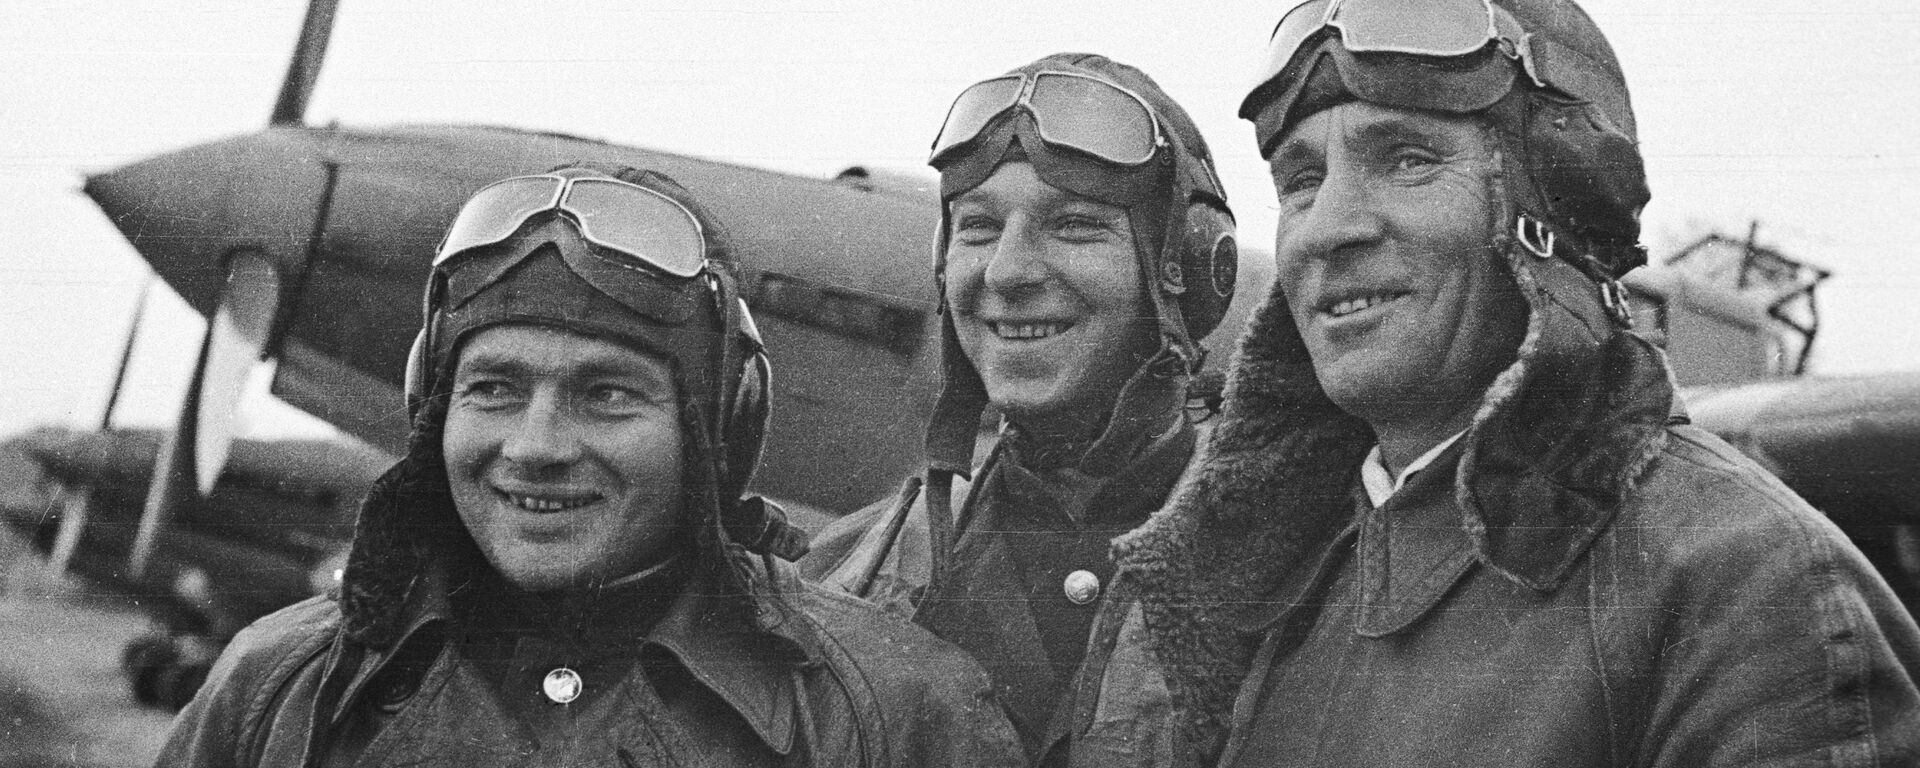 Aviadores soviéticos que participaron en la liberación de Corea - Sputnik Mundo, 1920, 25.12.2019